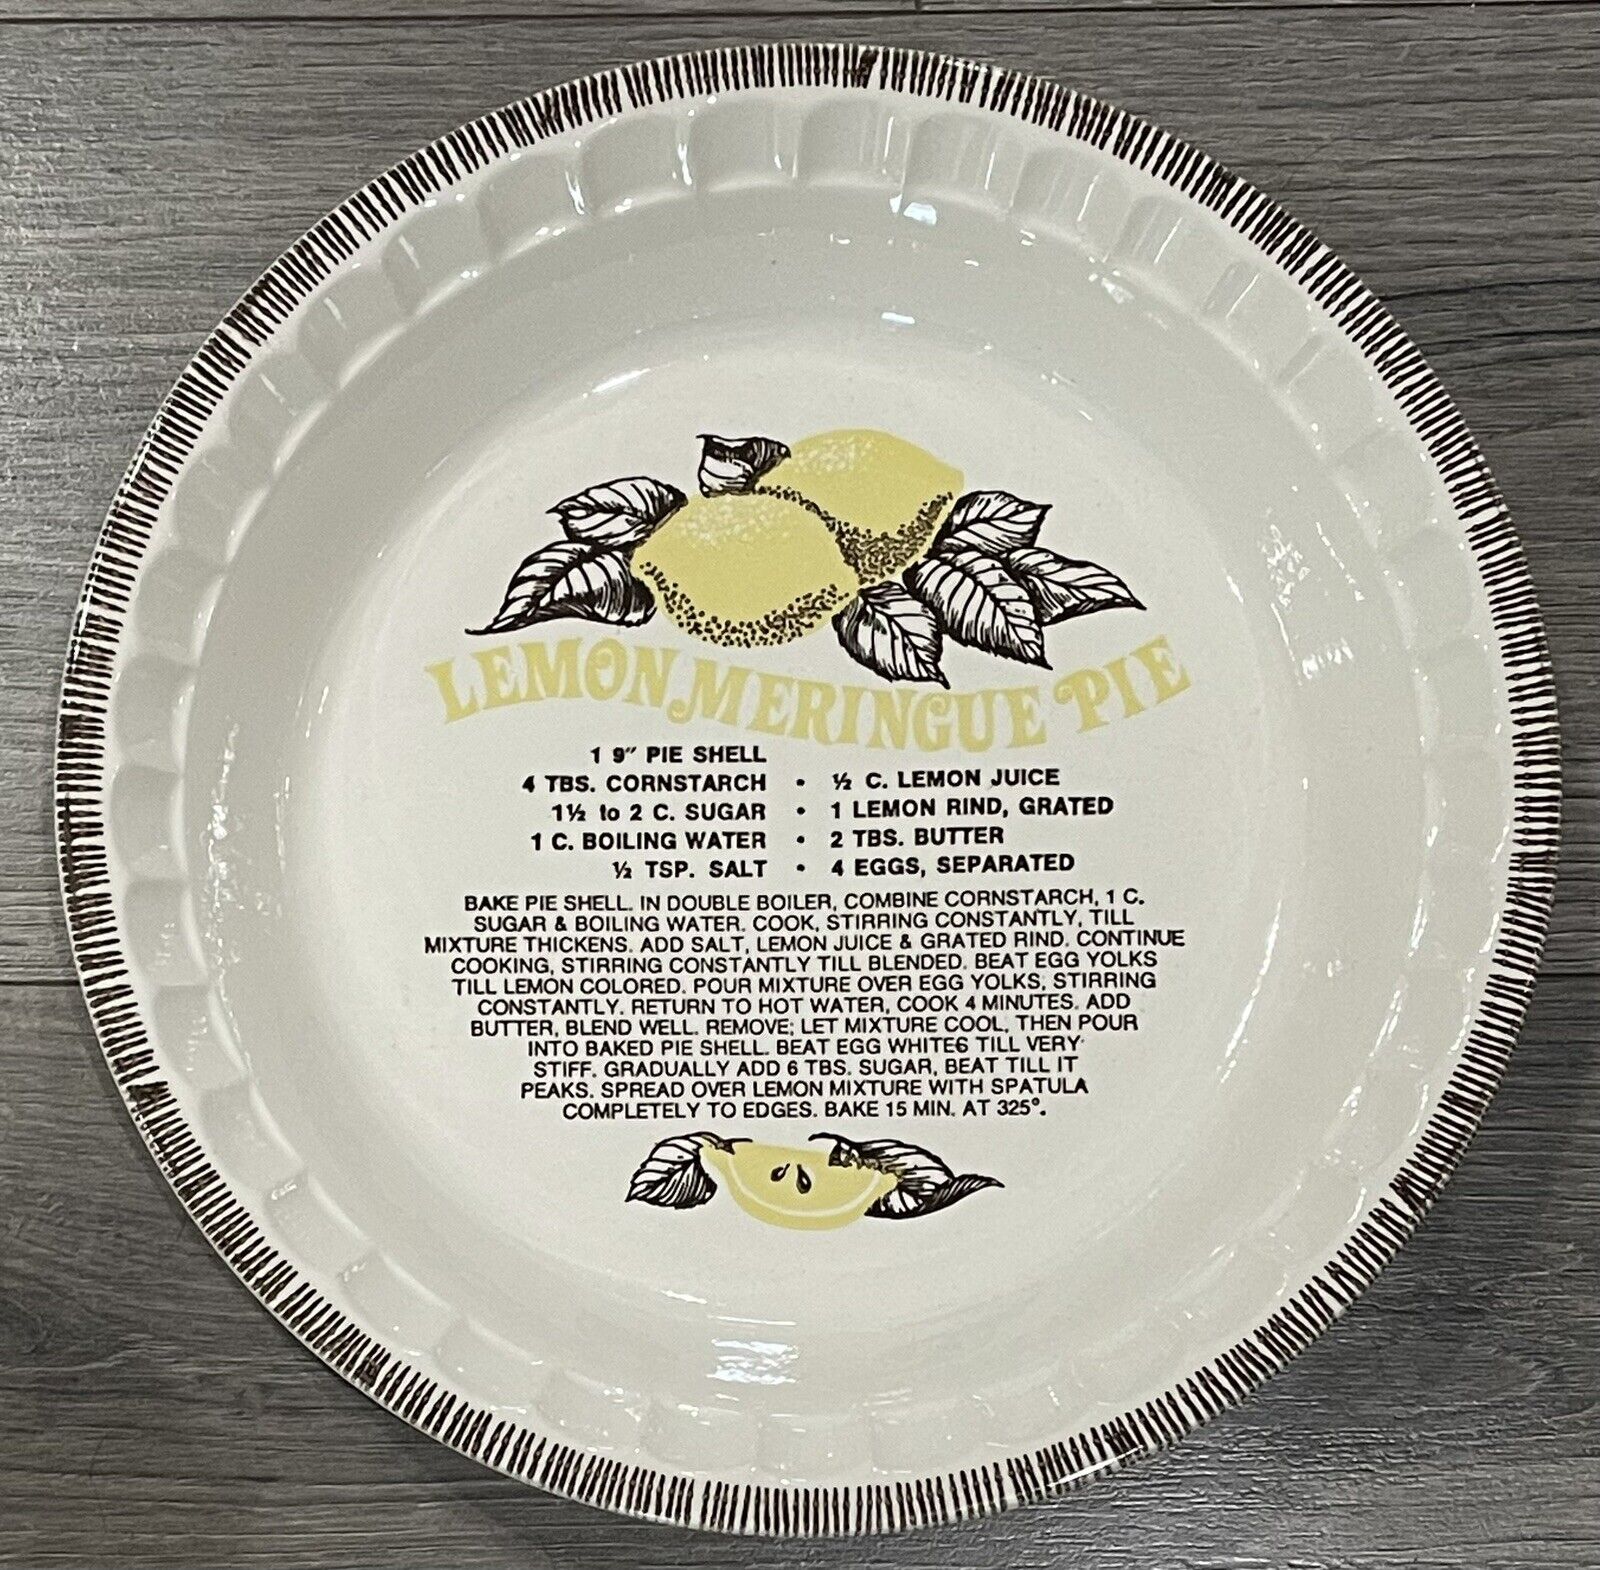 Vintage Style Lemon Meringue Pie Plate by Royal China Corp Vintage Kitchen